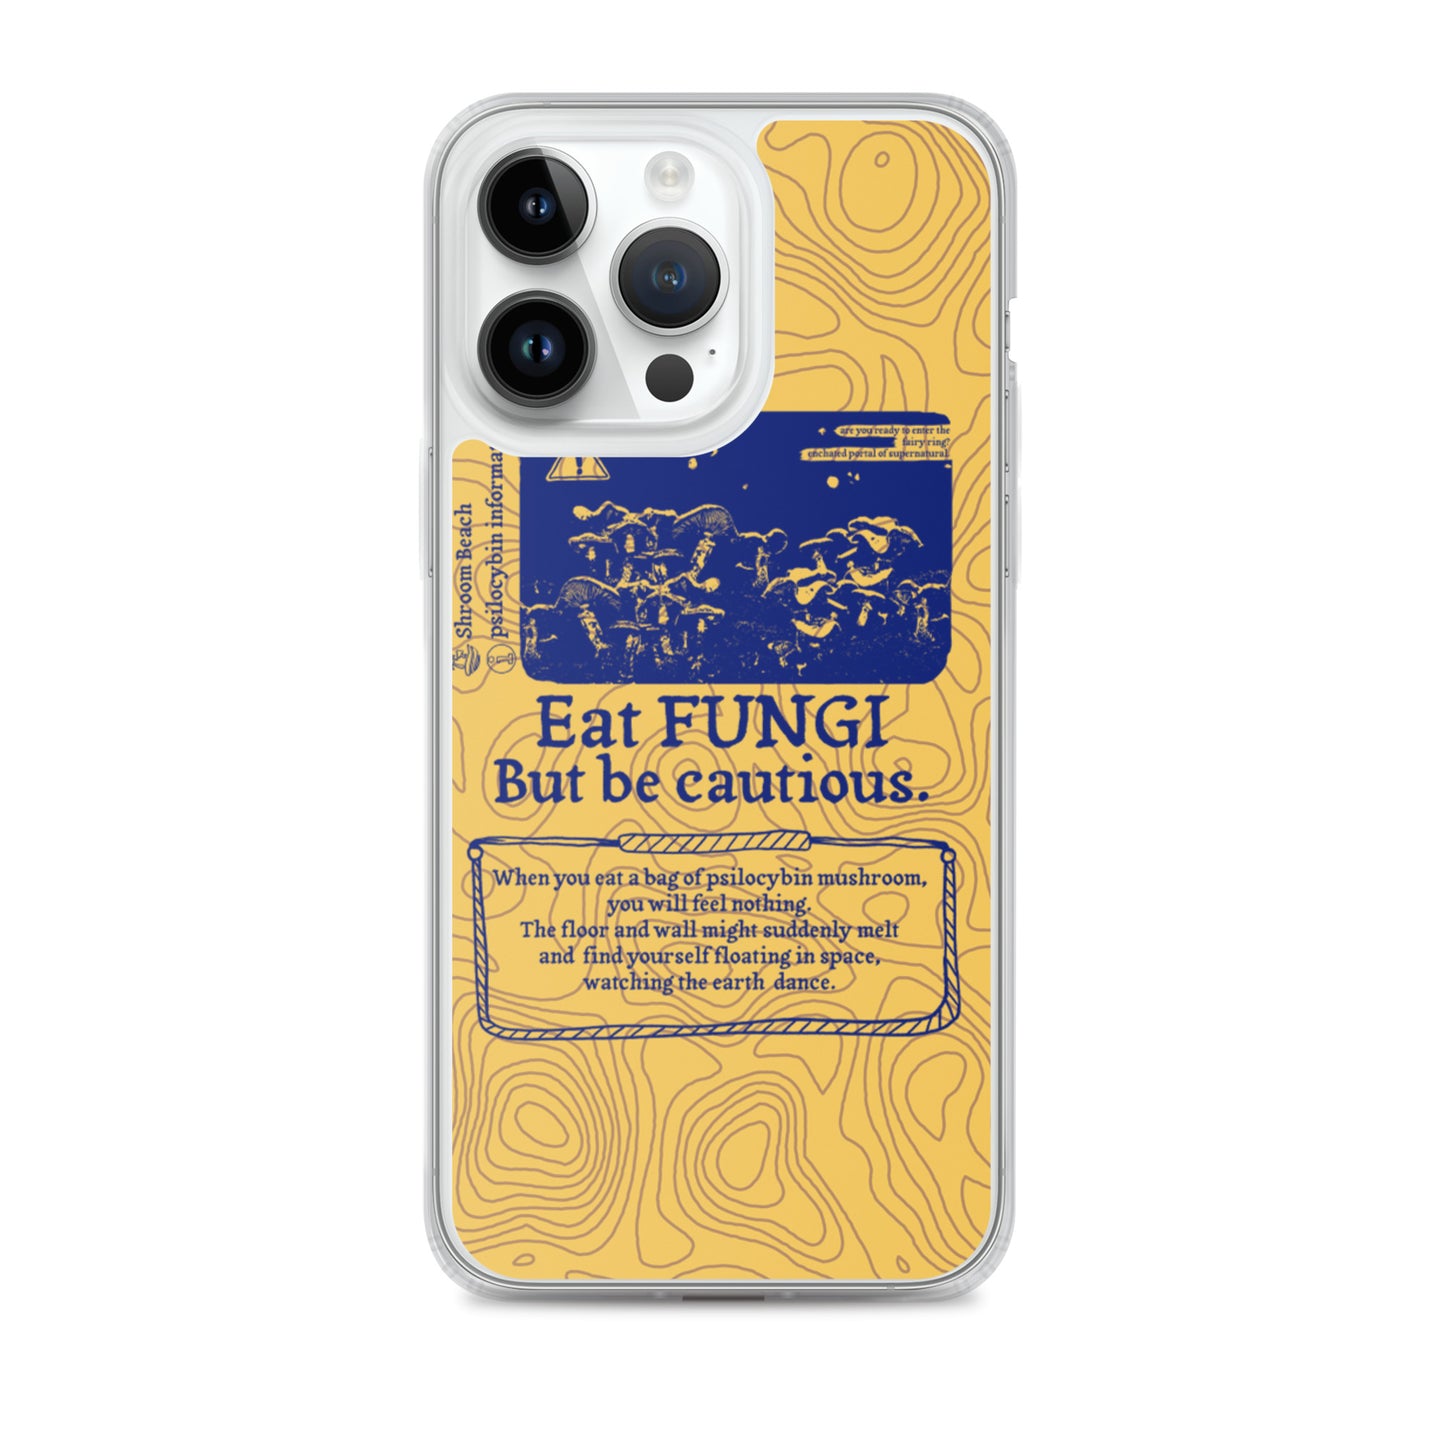 Eat Fun Guy iPhone Case